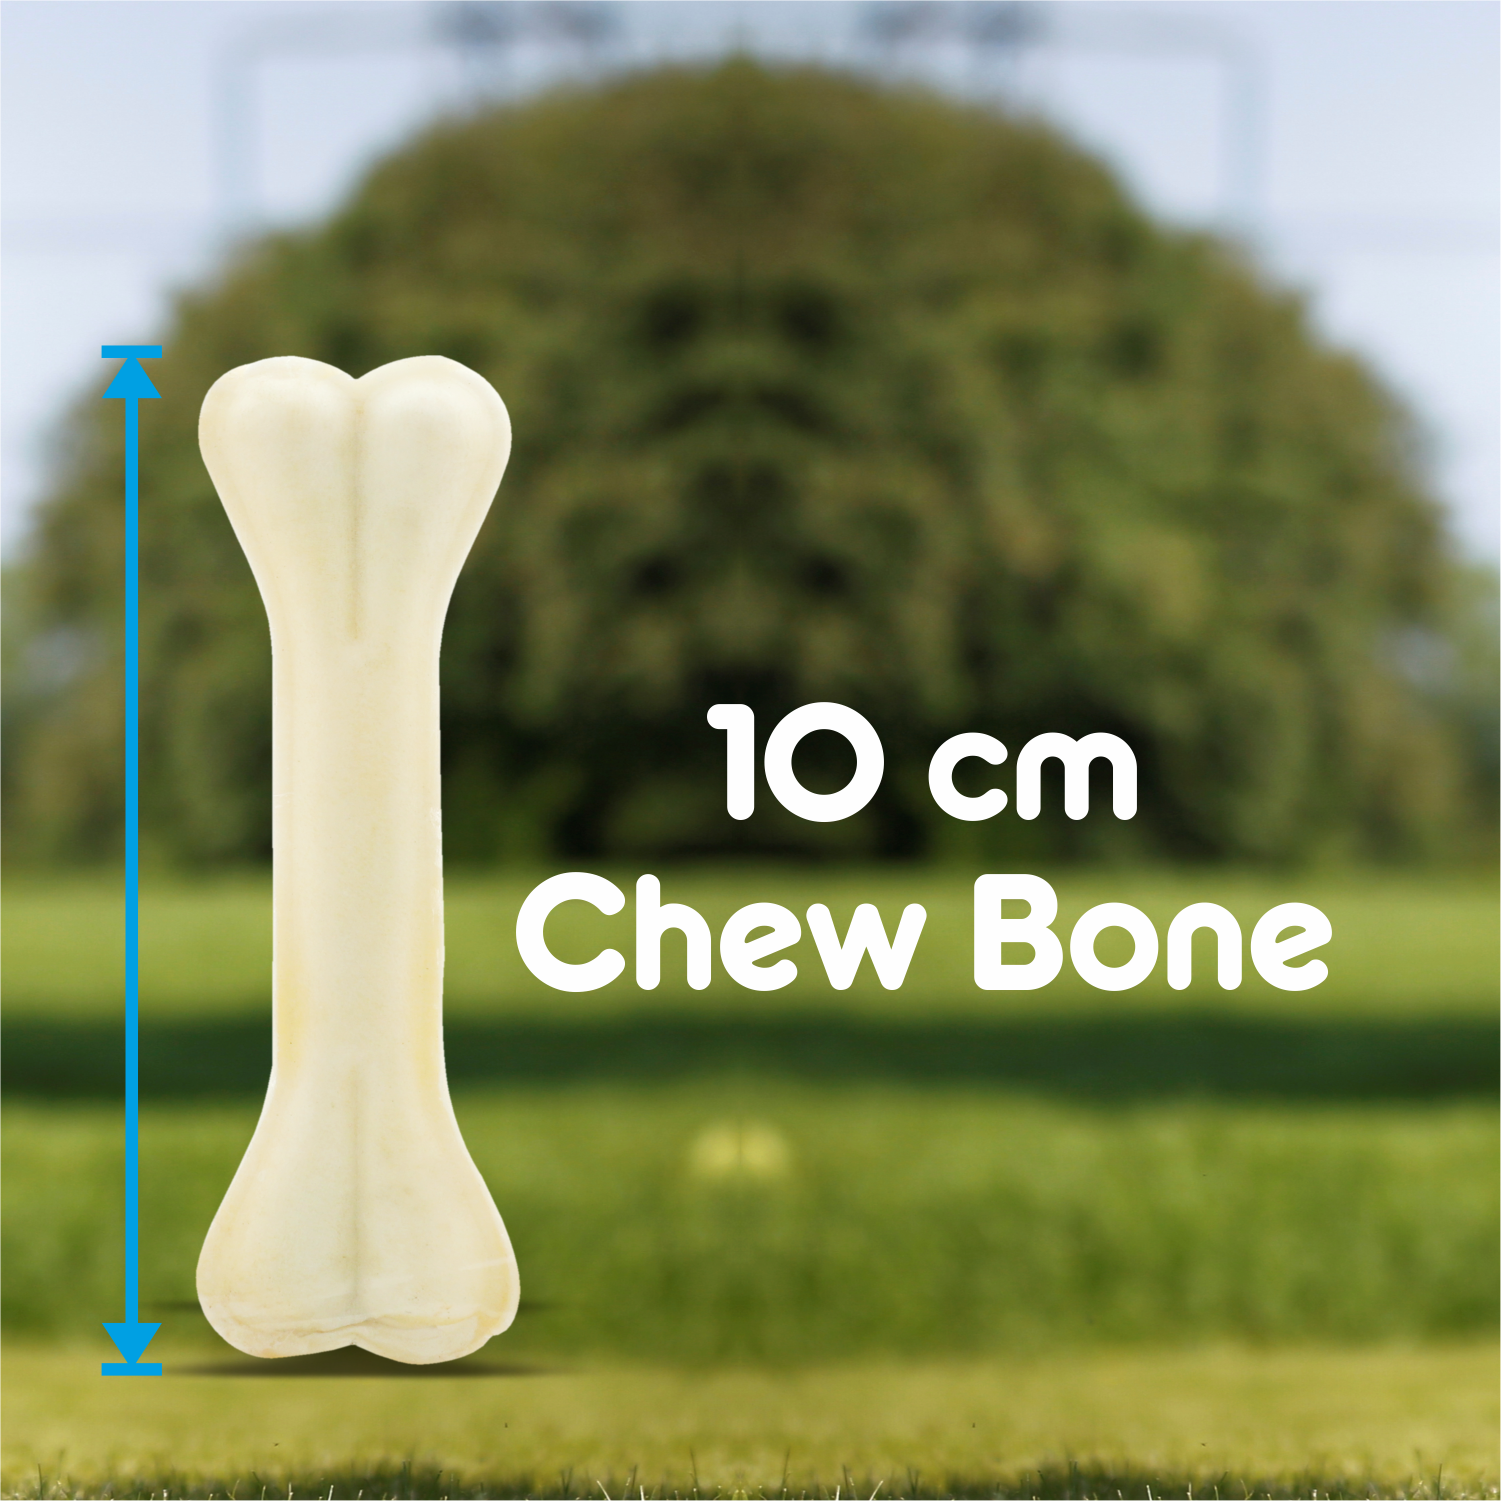 Purepet Chew Bone For Dogs